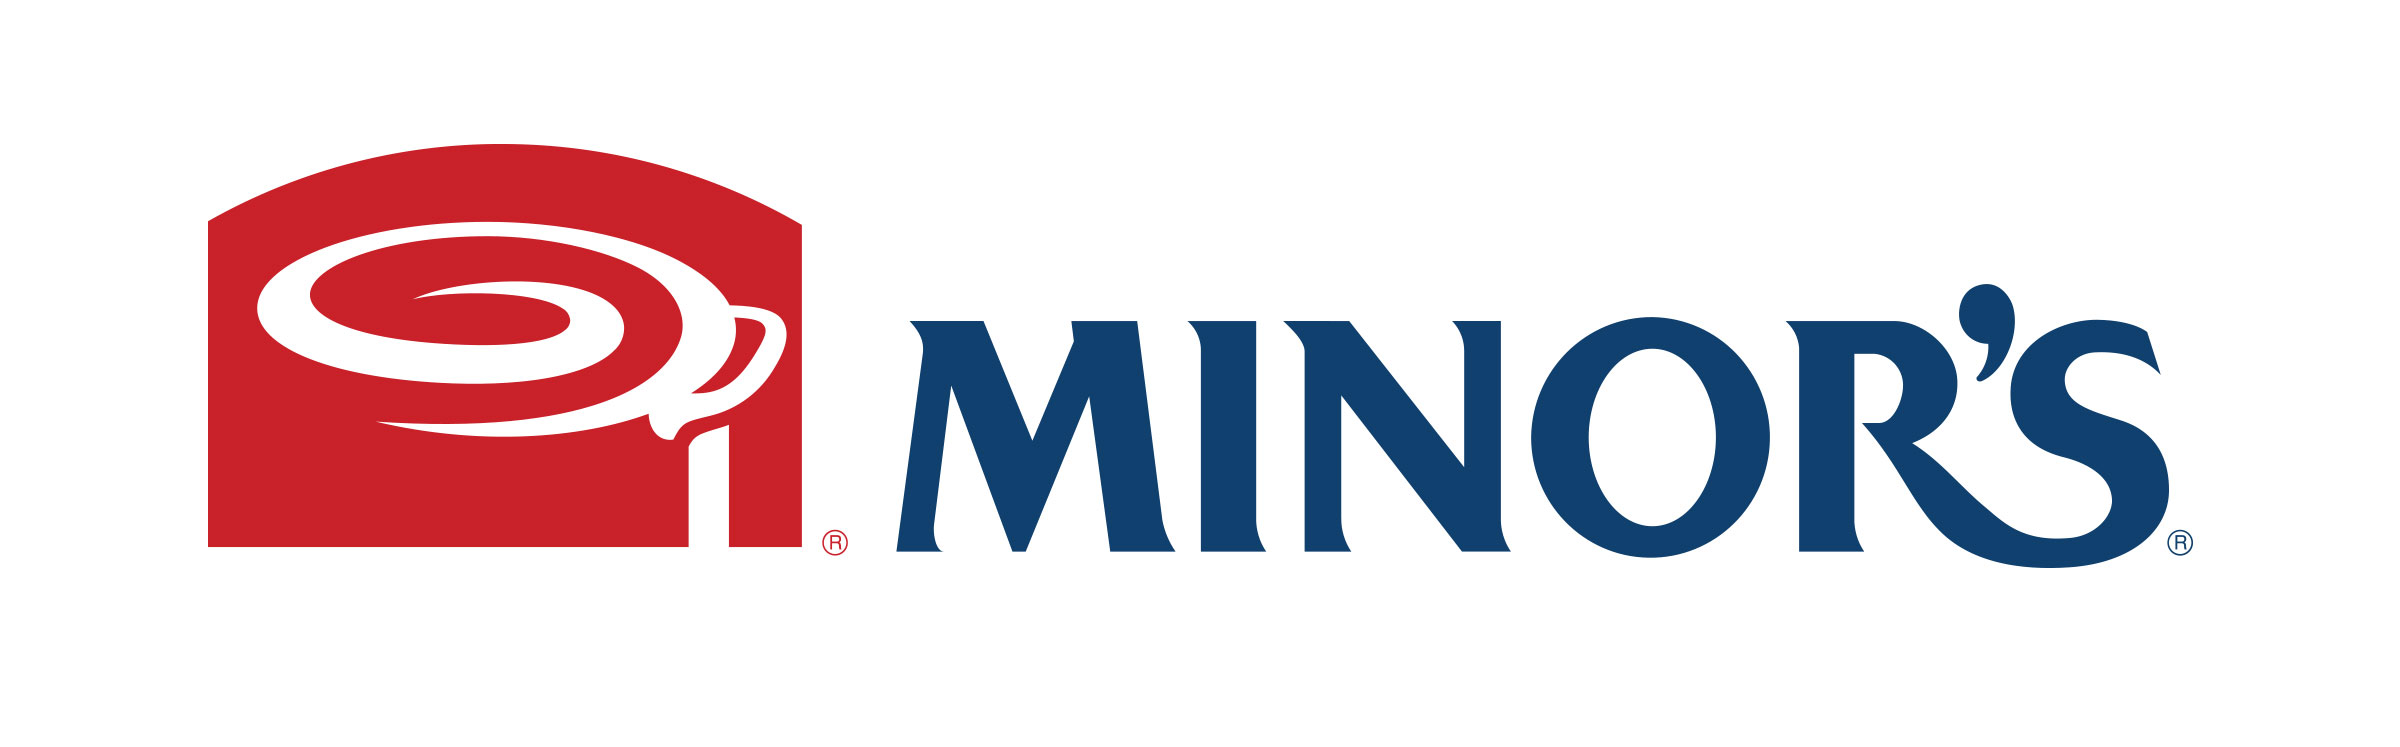 Minors_2_color_logo.jpg